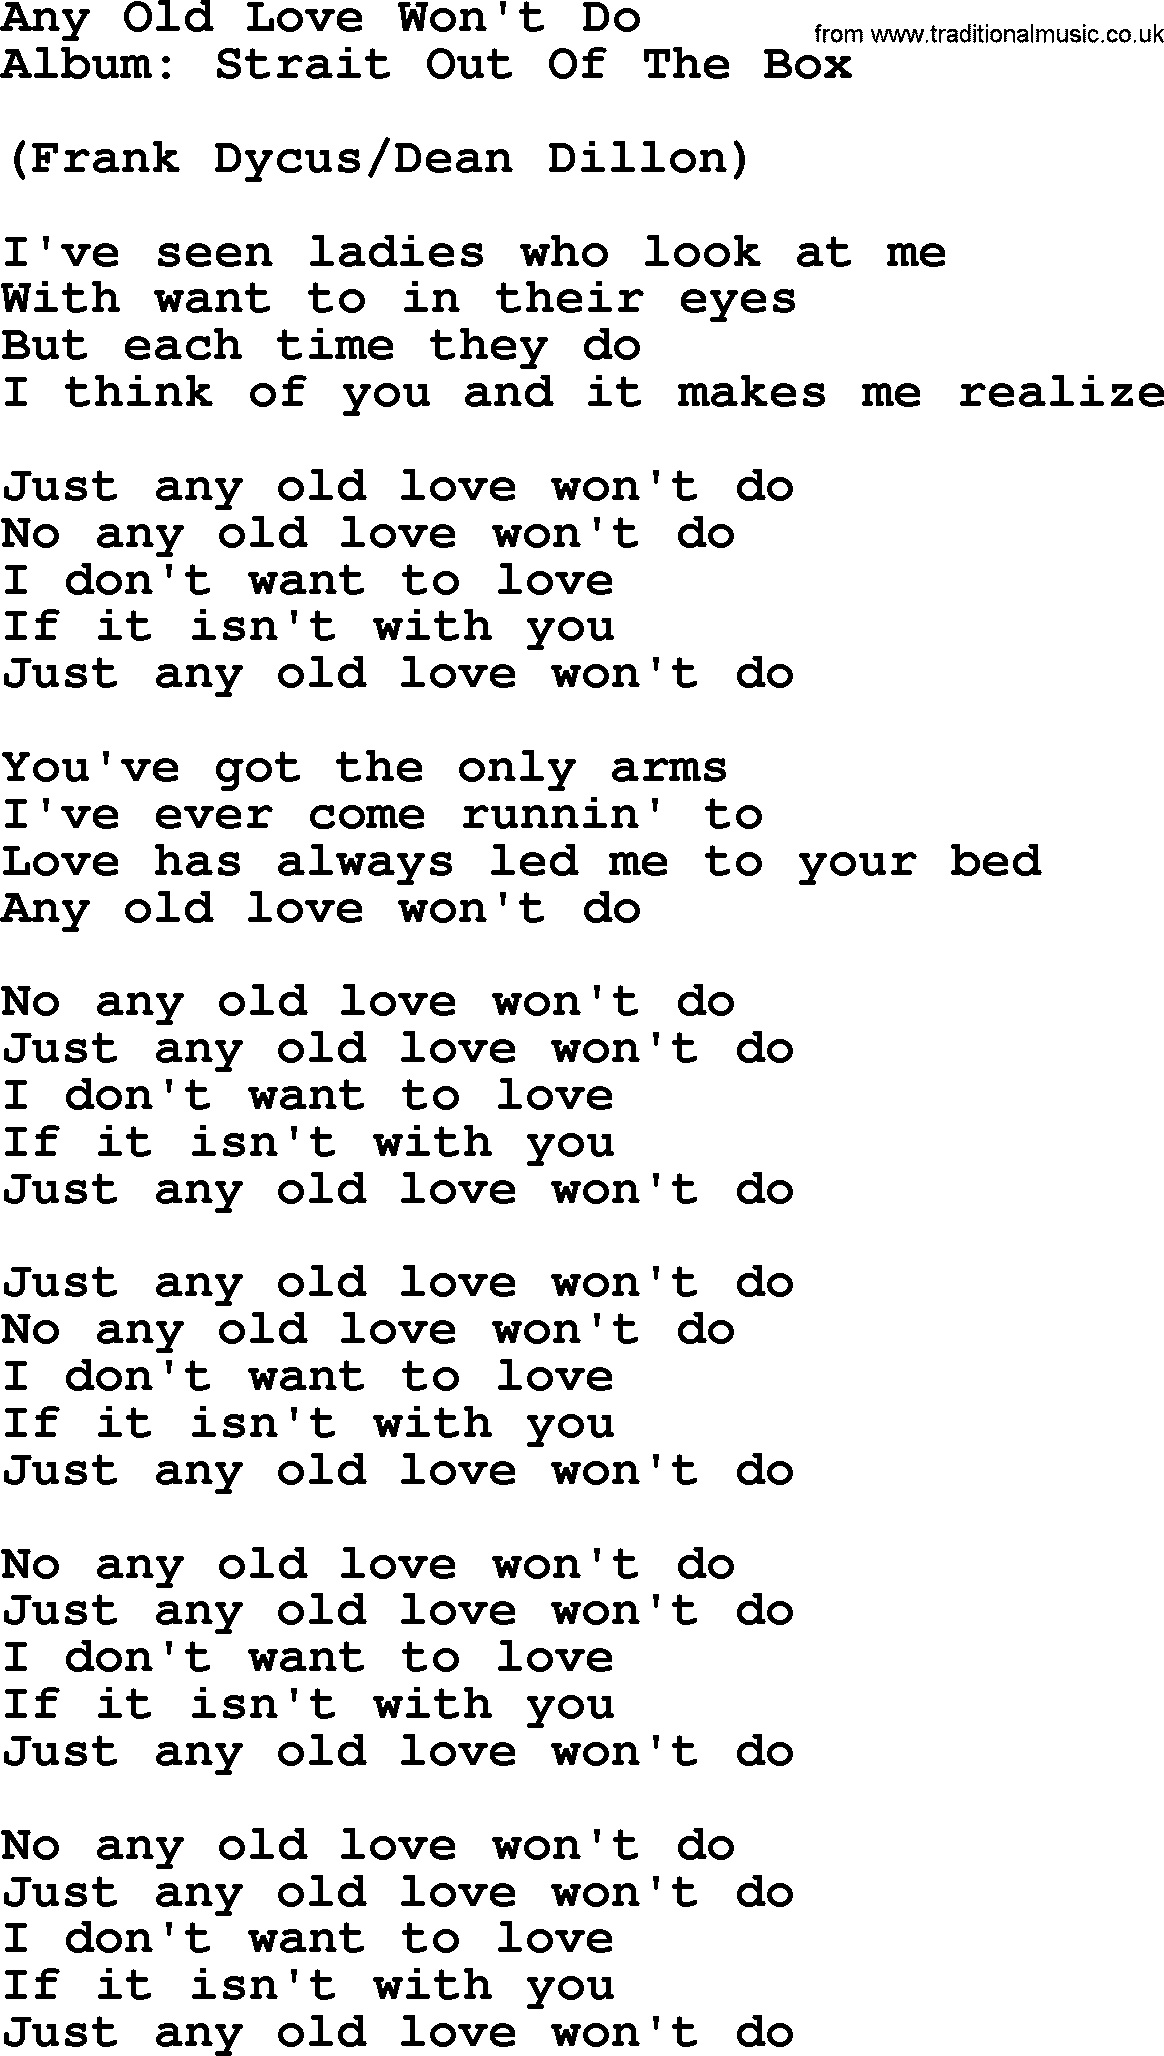 George Strait song: Any Old Love Won't Do, lyrics